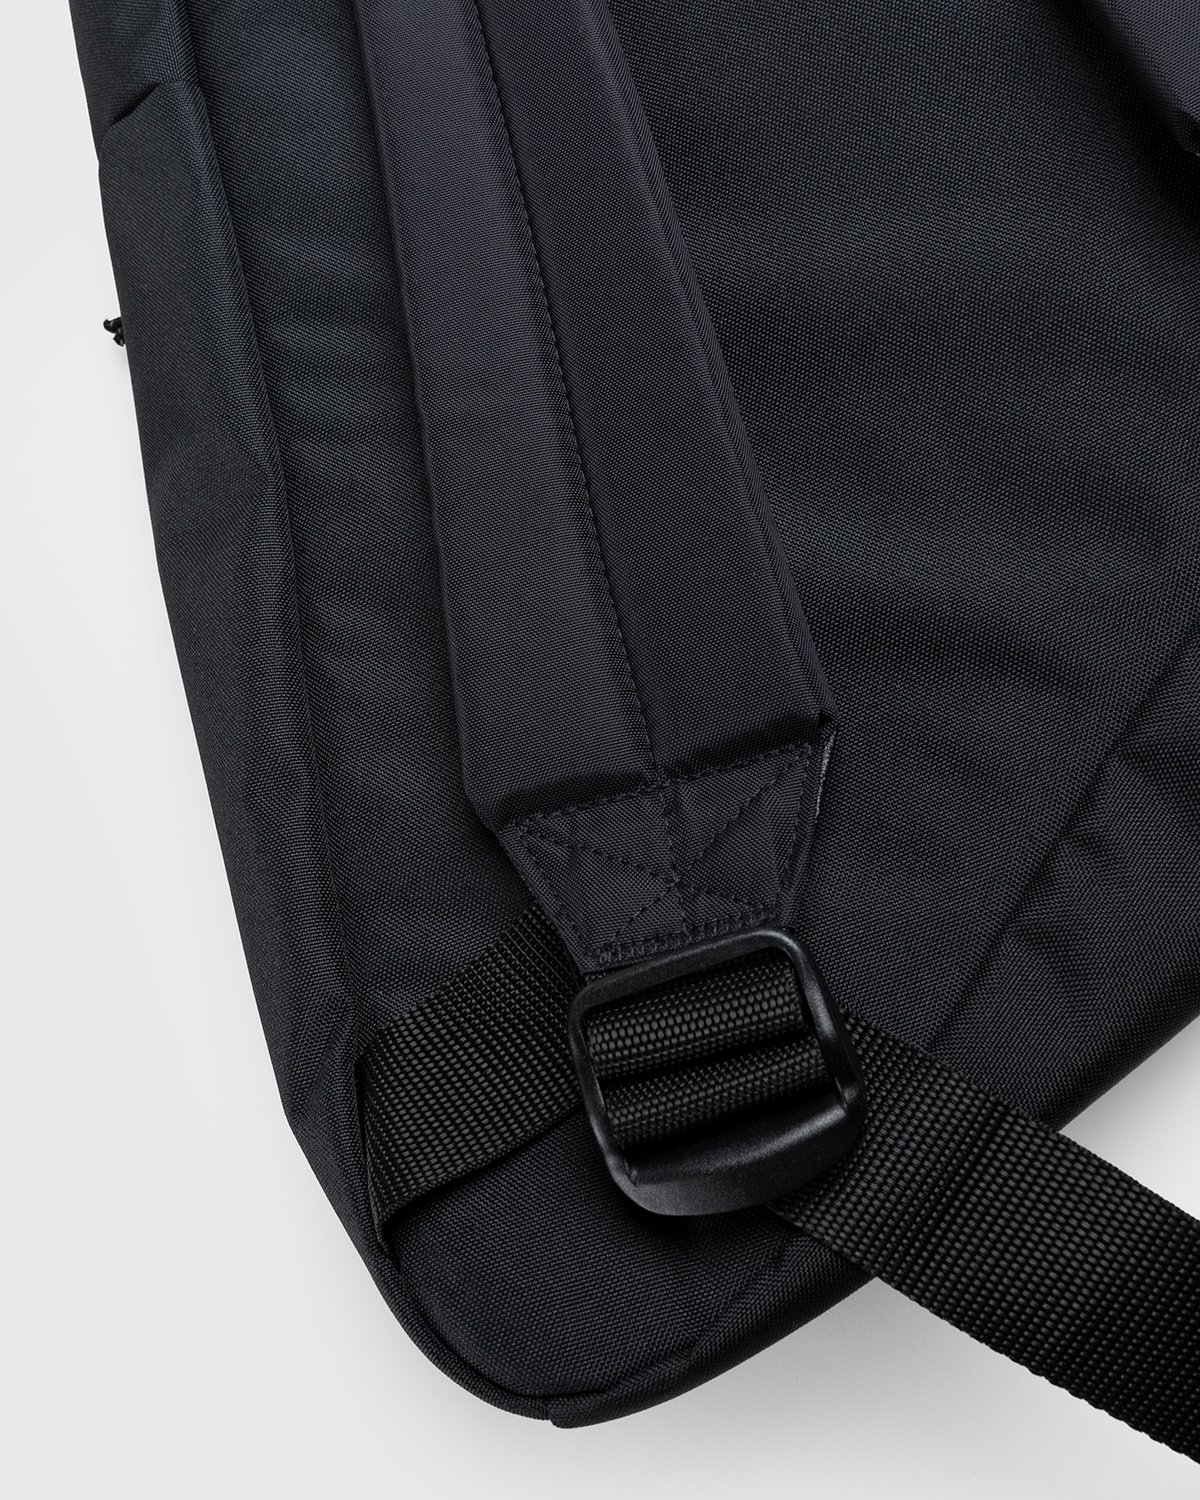 MM6 Maison Margiela x Eastpak - Zaino Backpack Black - Accessories - Black - Image 6